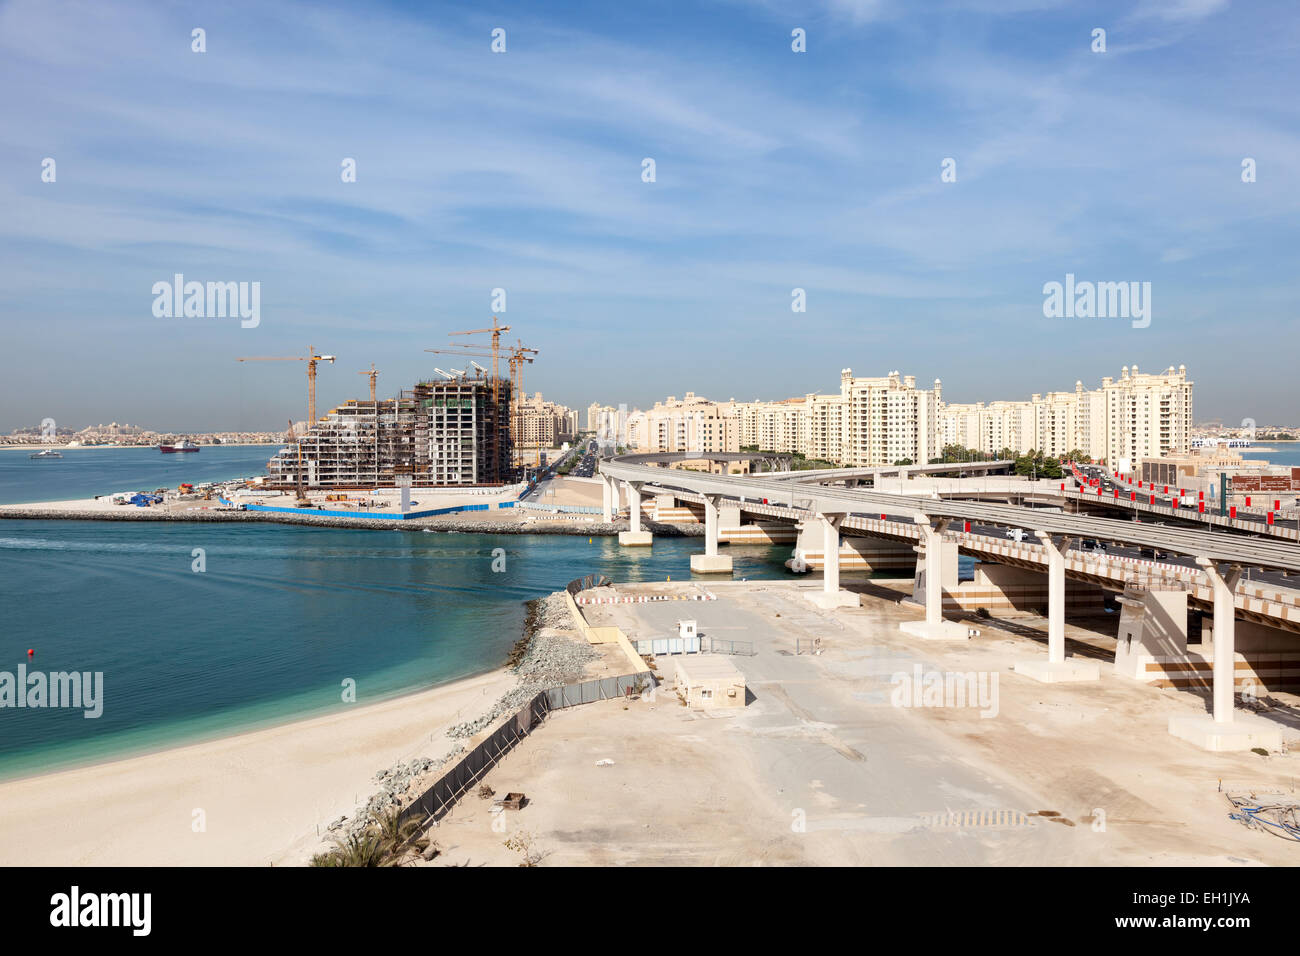 Palm Jumeirah monorail, autopistas y puentes que conectan los dispositivos Palm con China continental. Dubai, Emiratos Árabes Unidos. Foto de stock